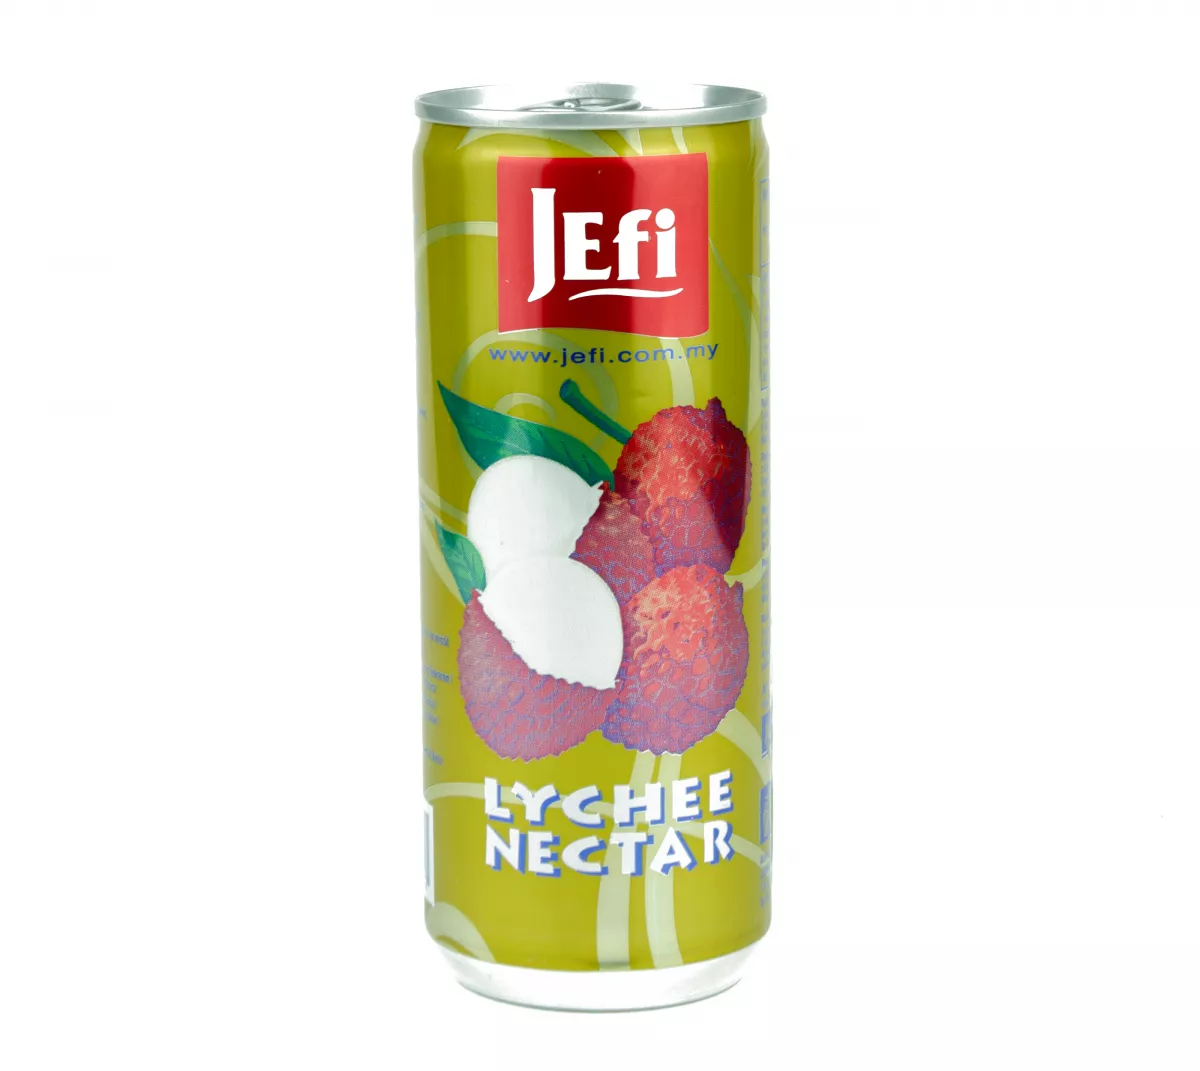 Suc de lychee JEFI 250ml, [],asianfood.ro